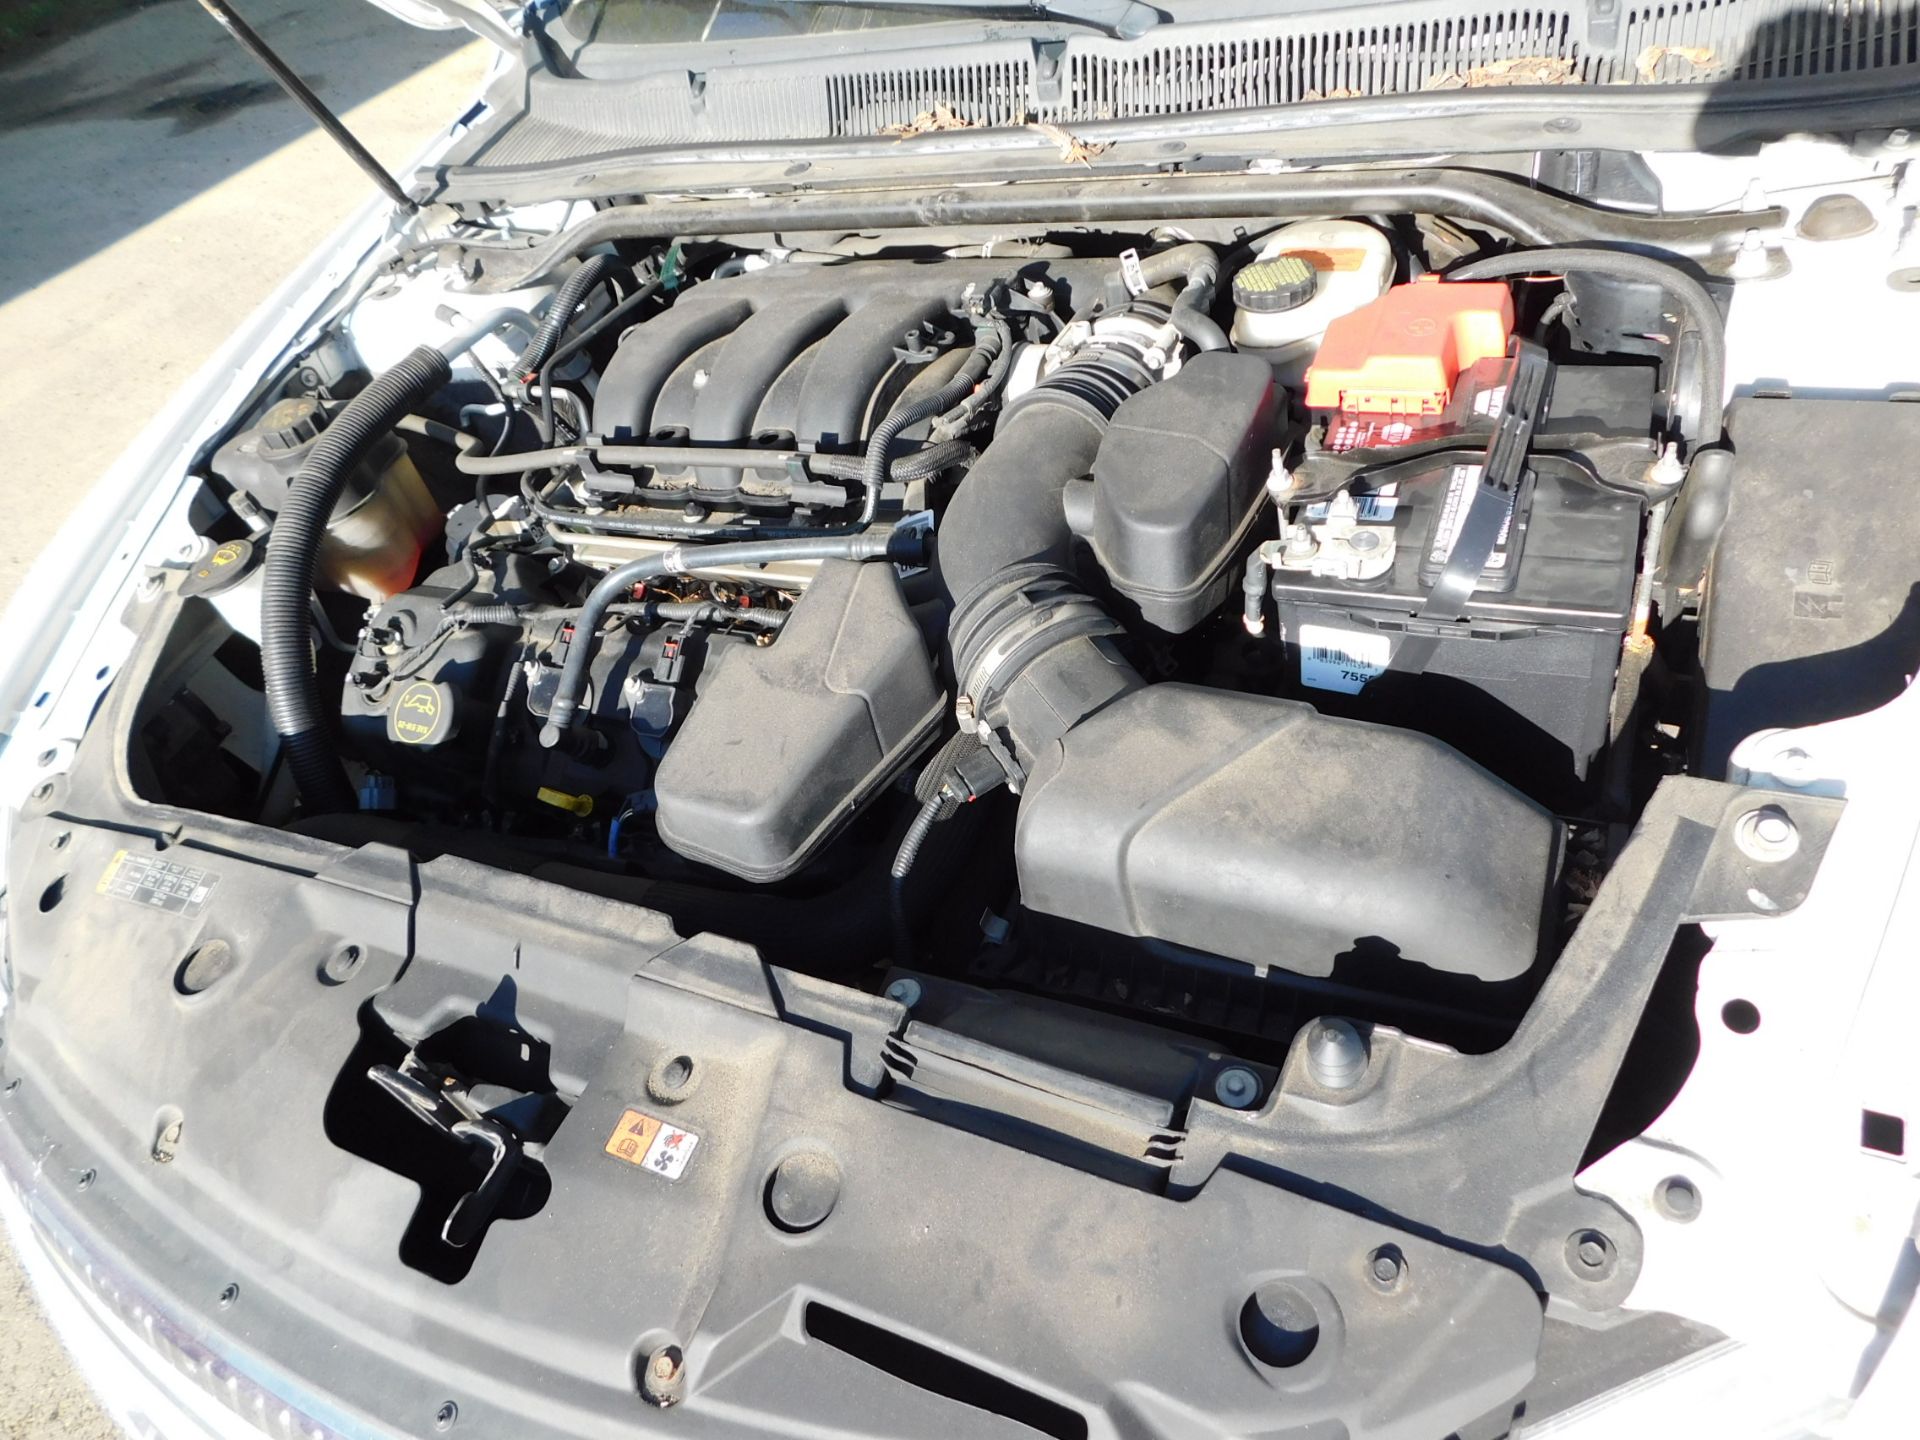 2015 Ford Taurus SEL 4-Door Sedan, vin 1FAHP2E80FG182717, Automatic Transmission, PW,PL,AC,Leather - Image 40 of 42